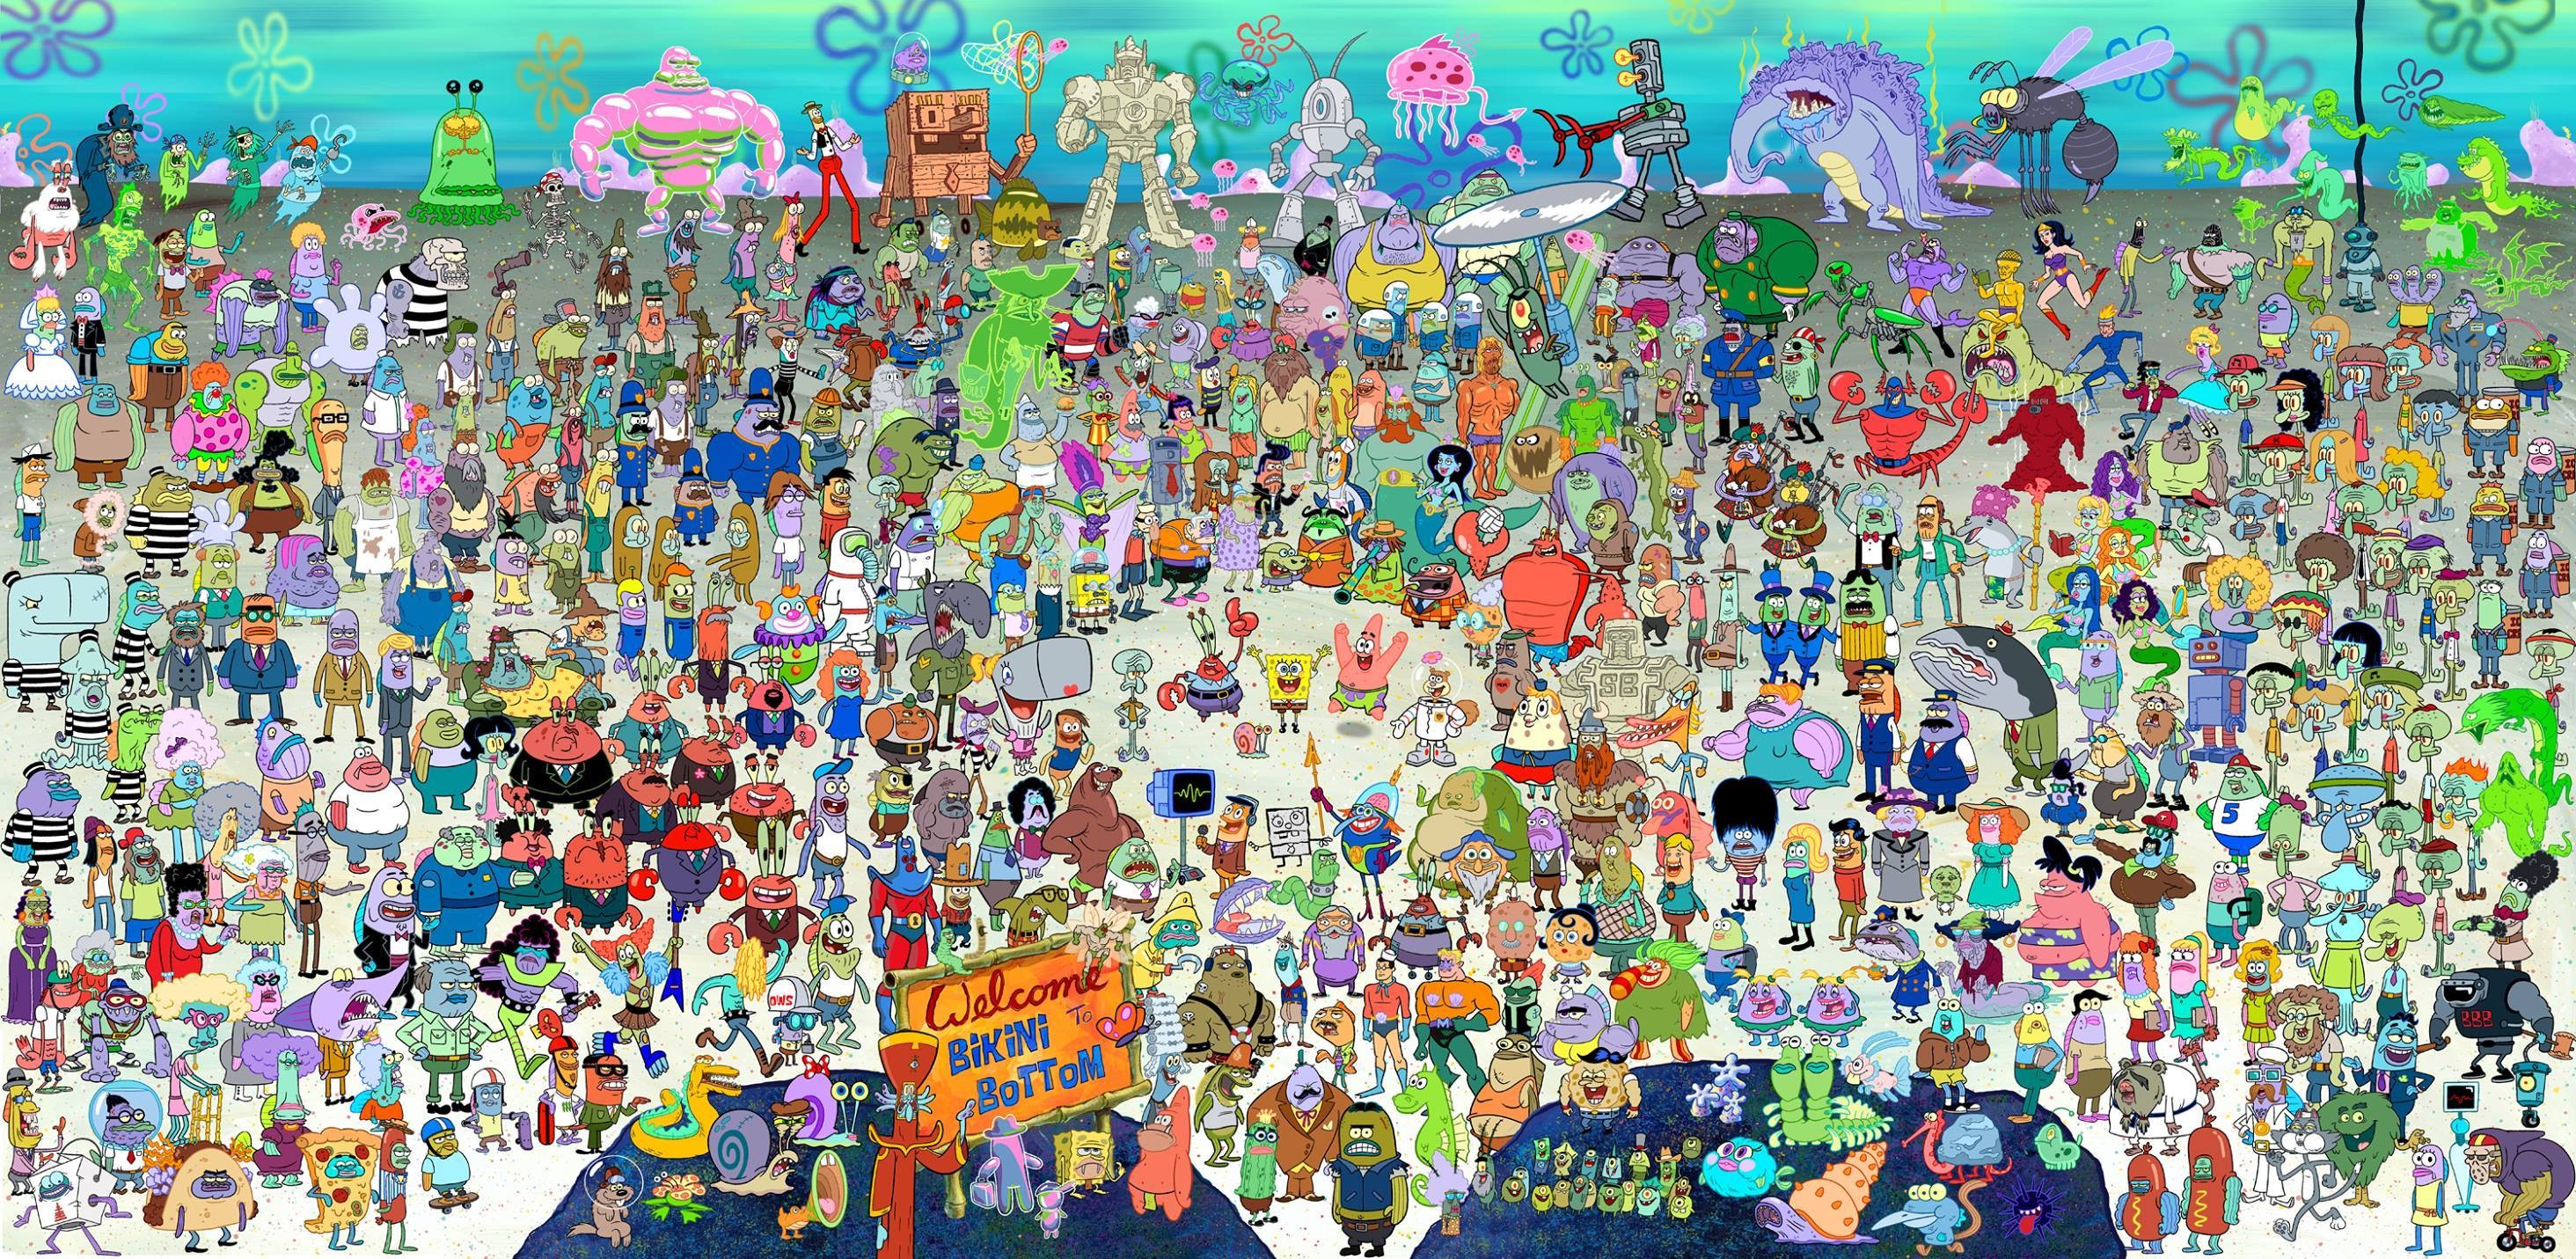 Wallpaper, people, collage, SpongeBob SquarePants, mural, ART, crowd, photomontage, child art 2928x1431